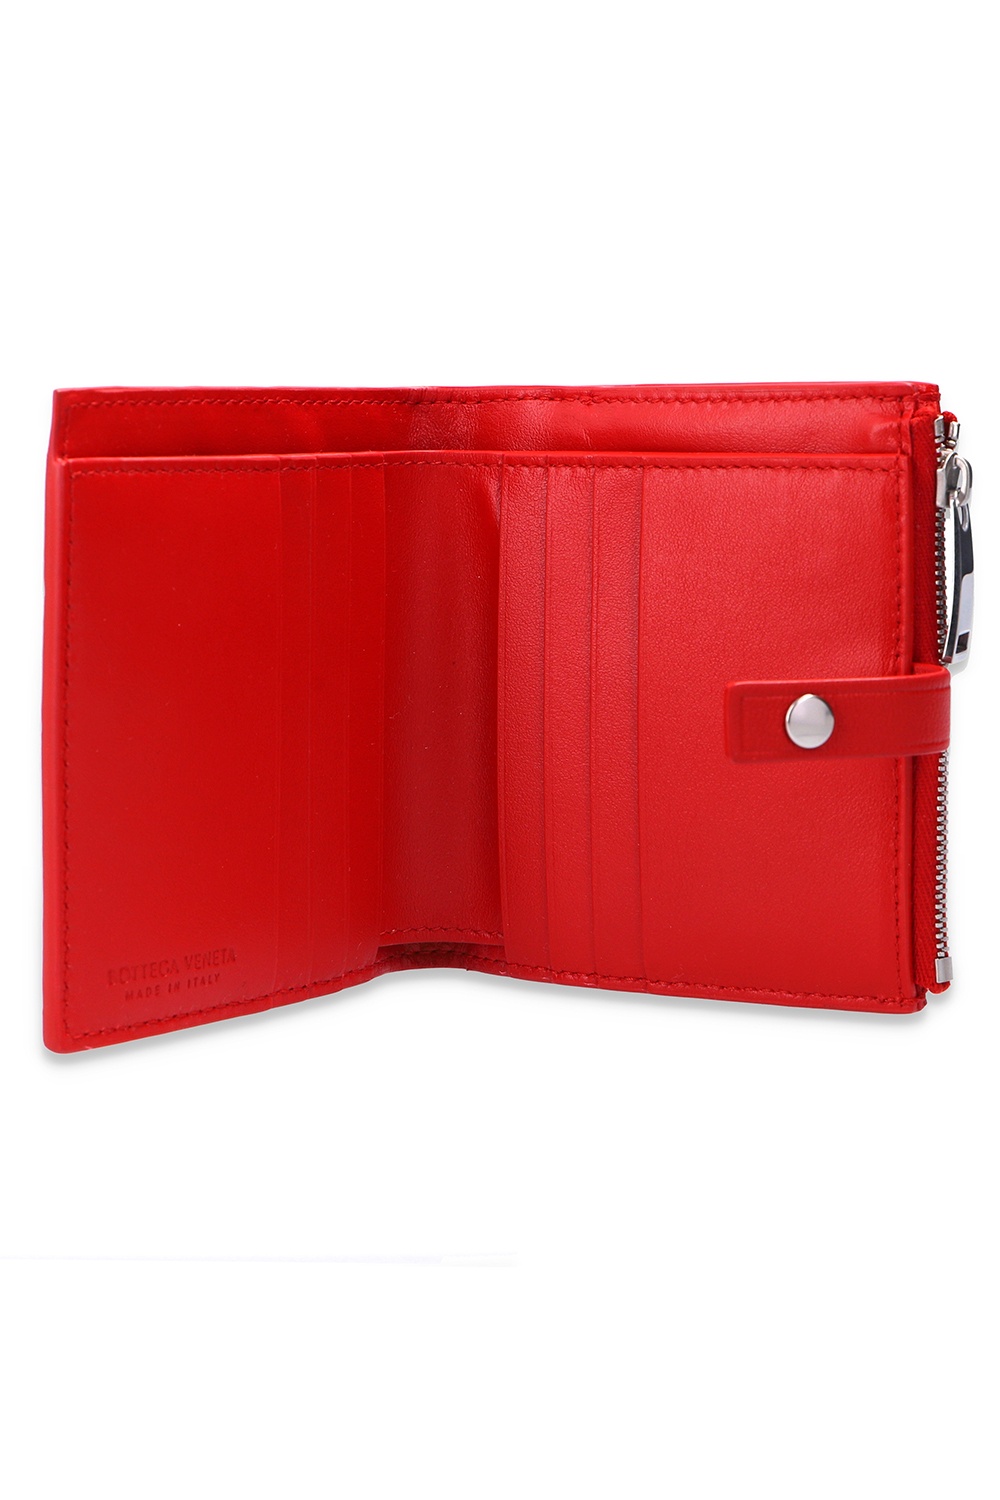 Bottega Veneta ‘Intrecciato’ leather wallet